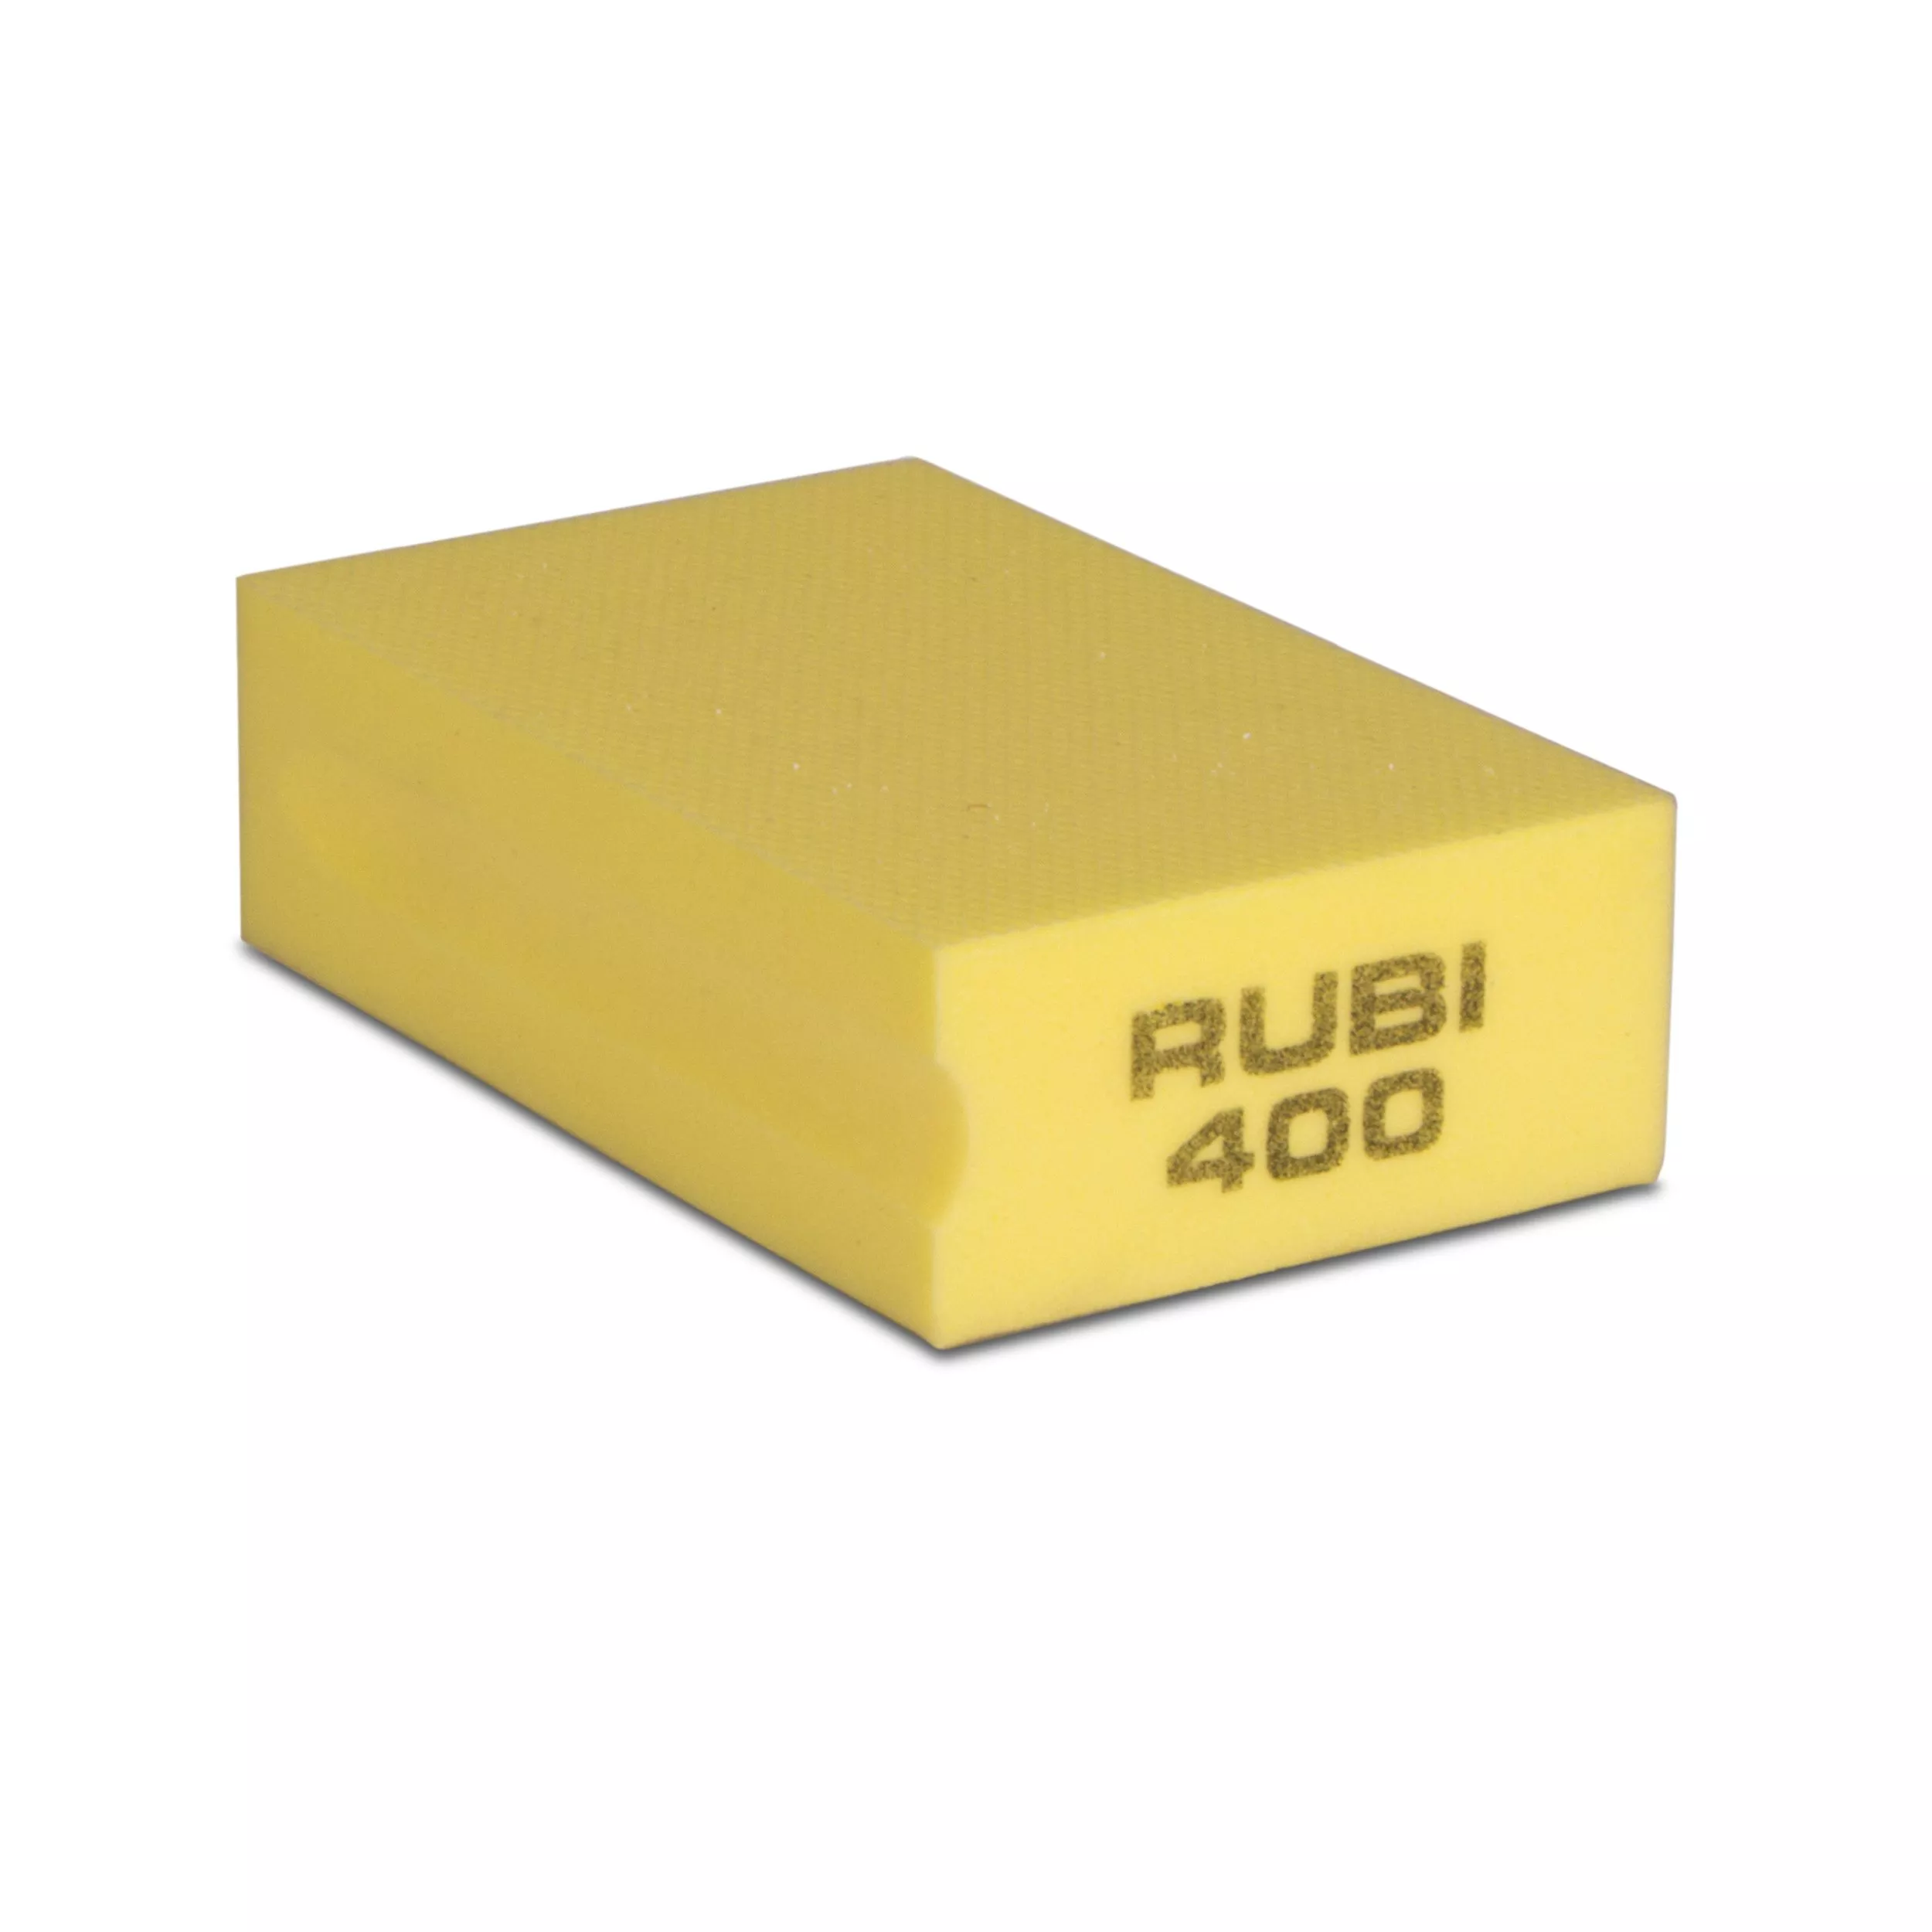 Rubi 400 Grit Hand Polishing Pad